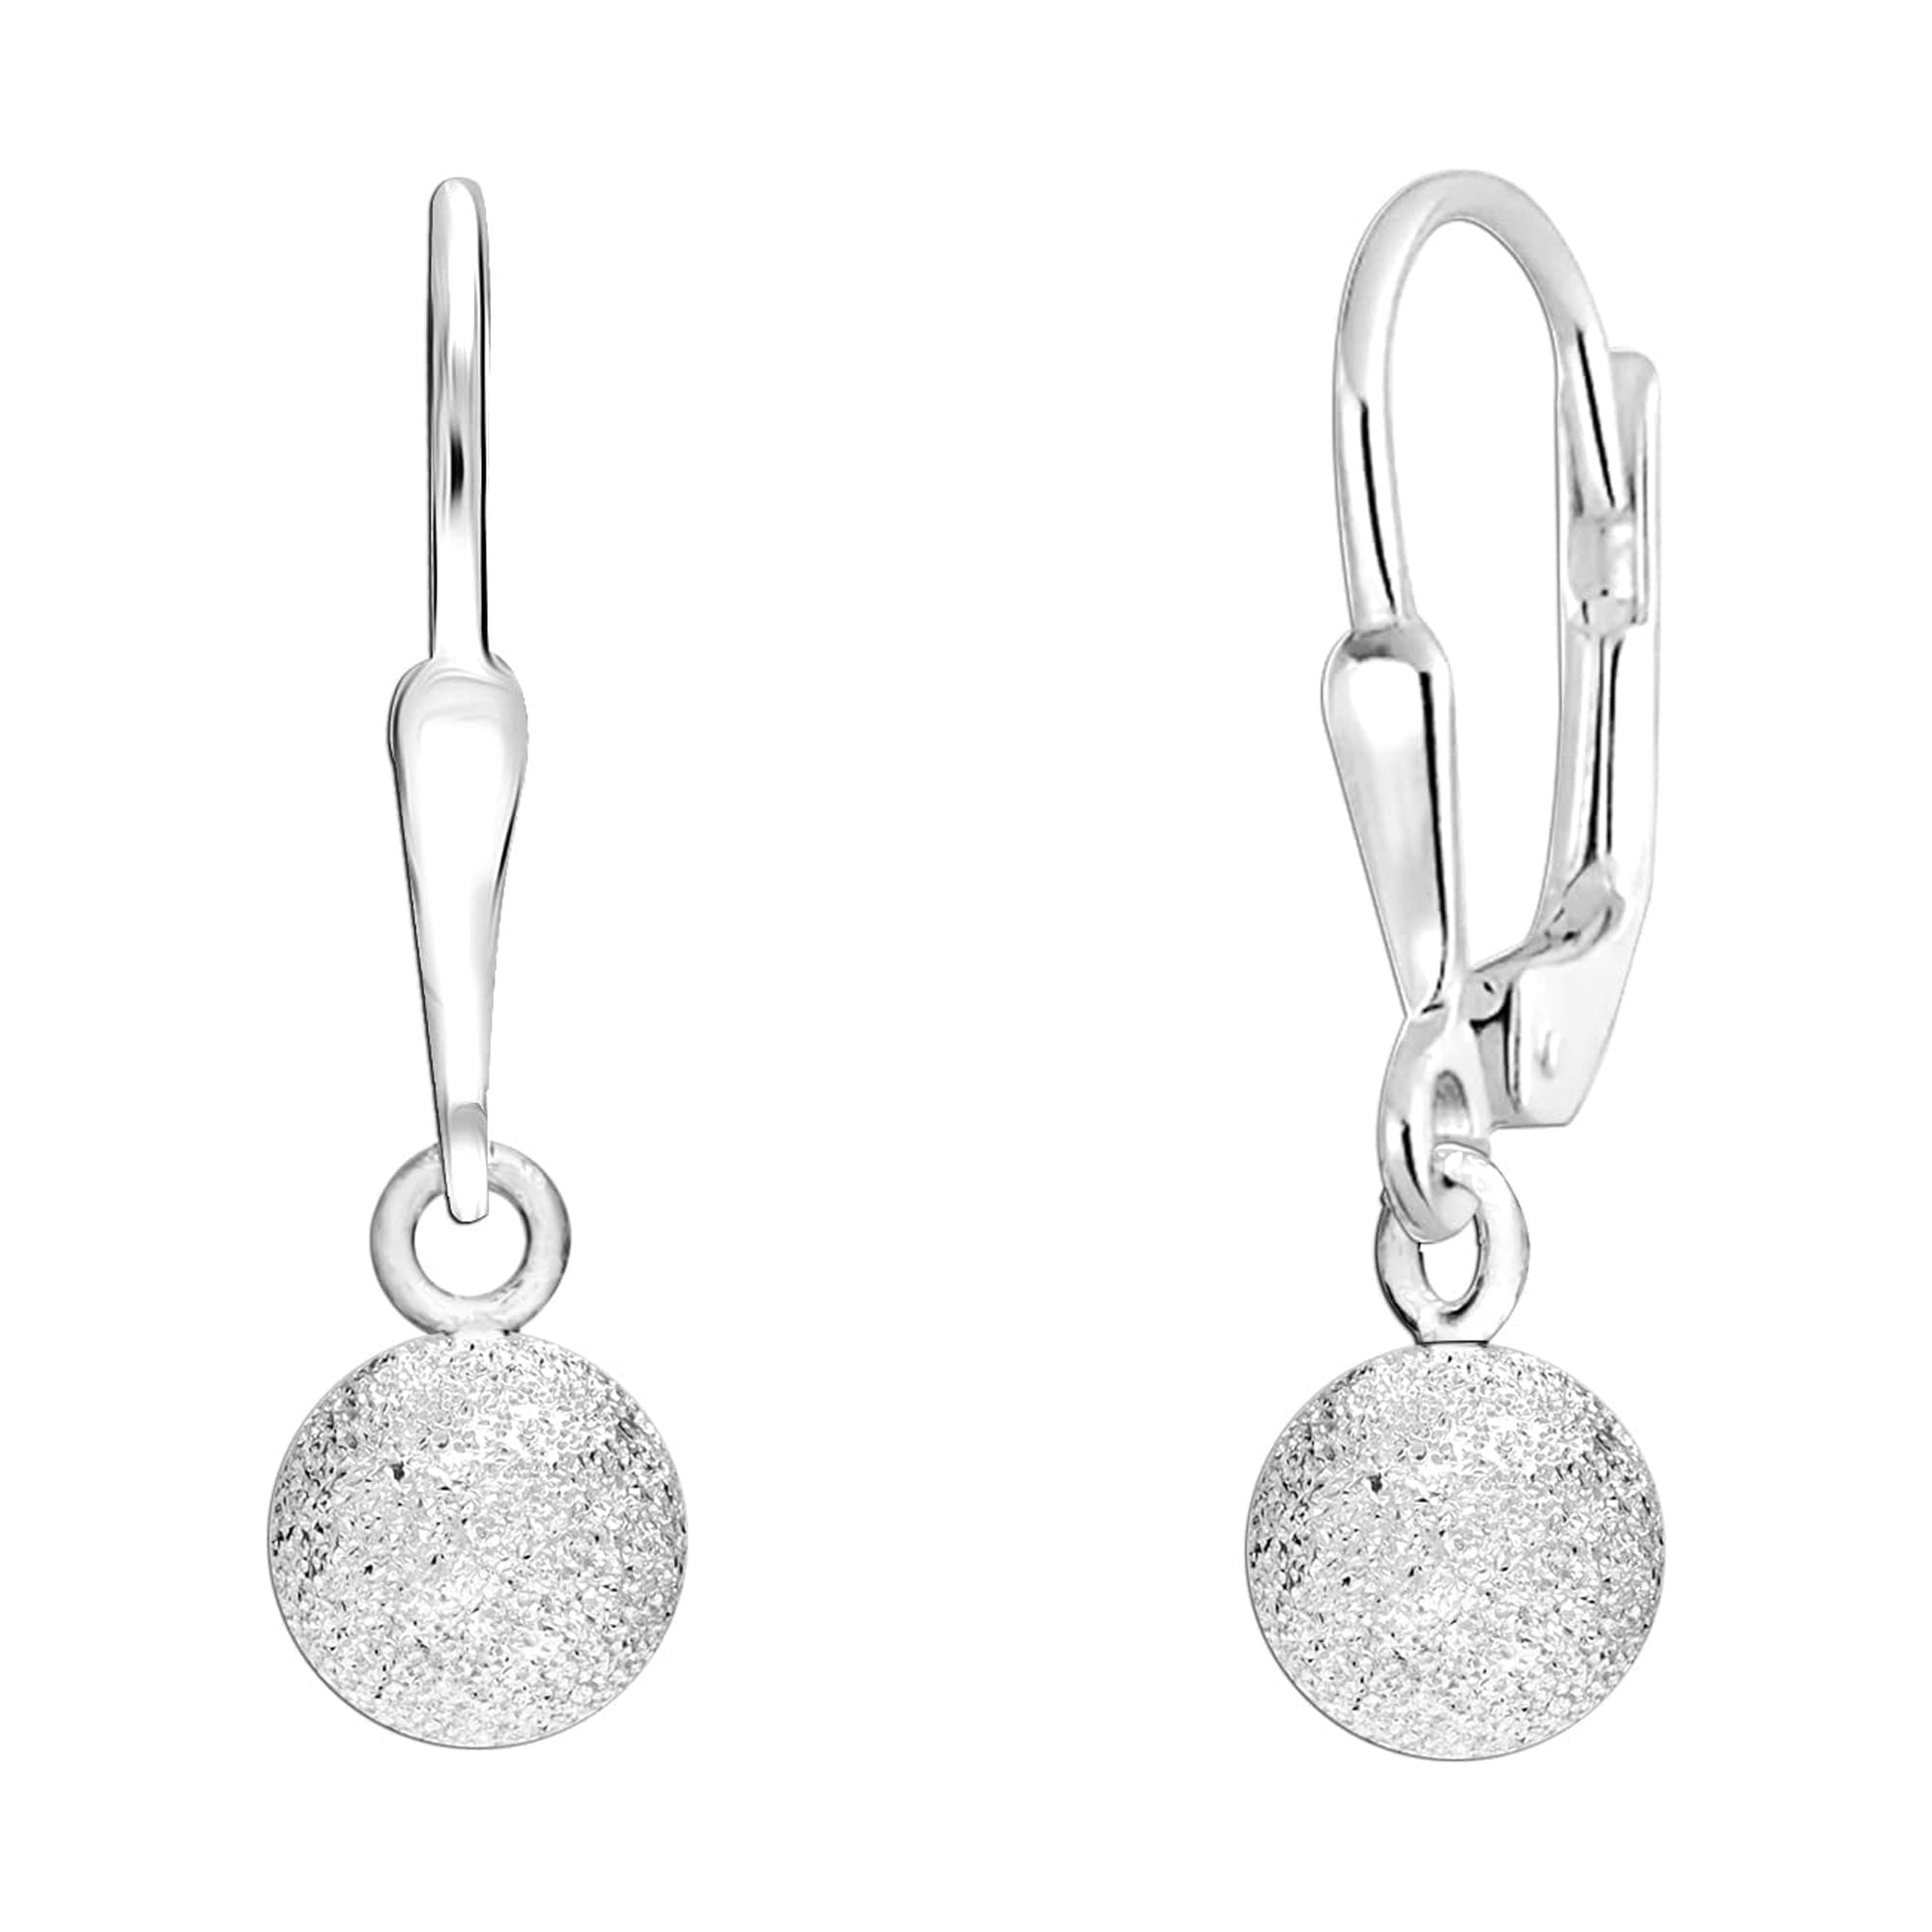 LeCalla 925 Sterling Silver Light-Weight Jewelry Laser Cut Ball Drop ...